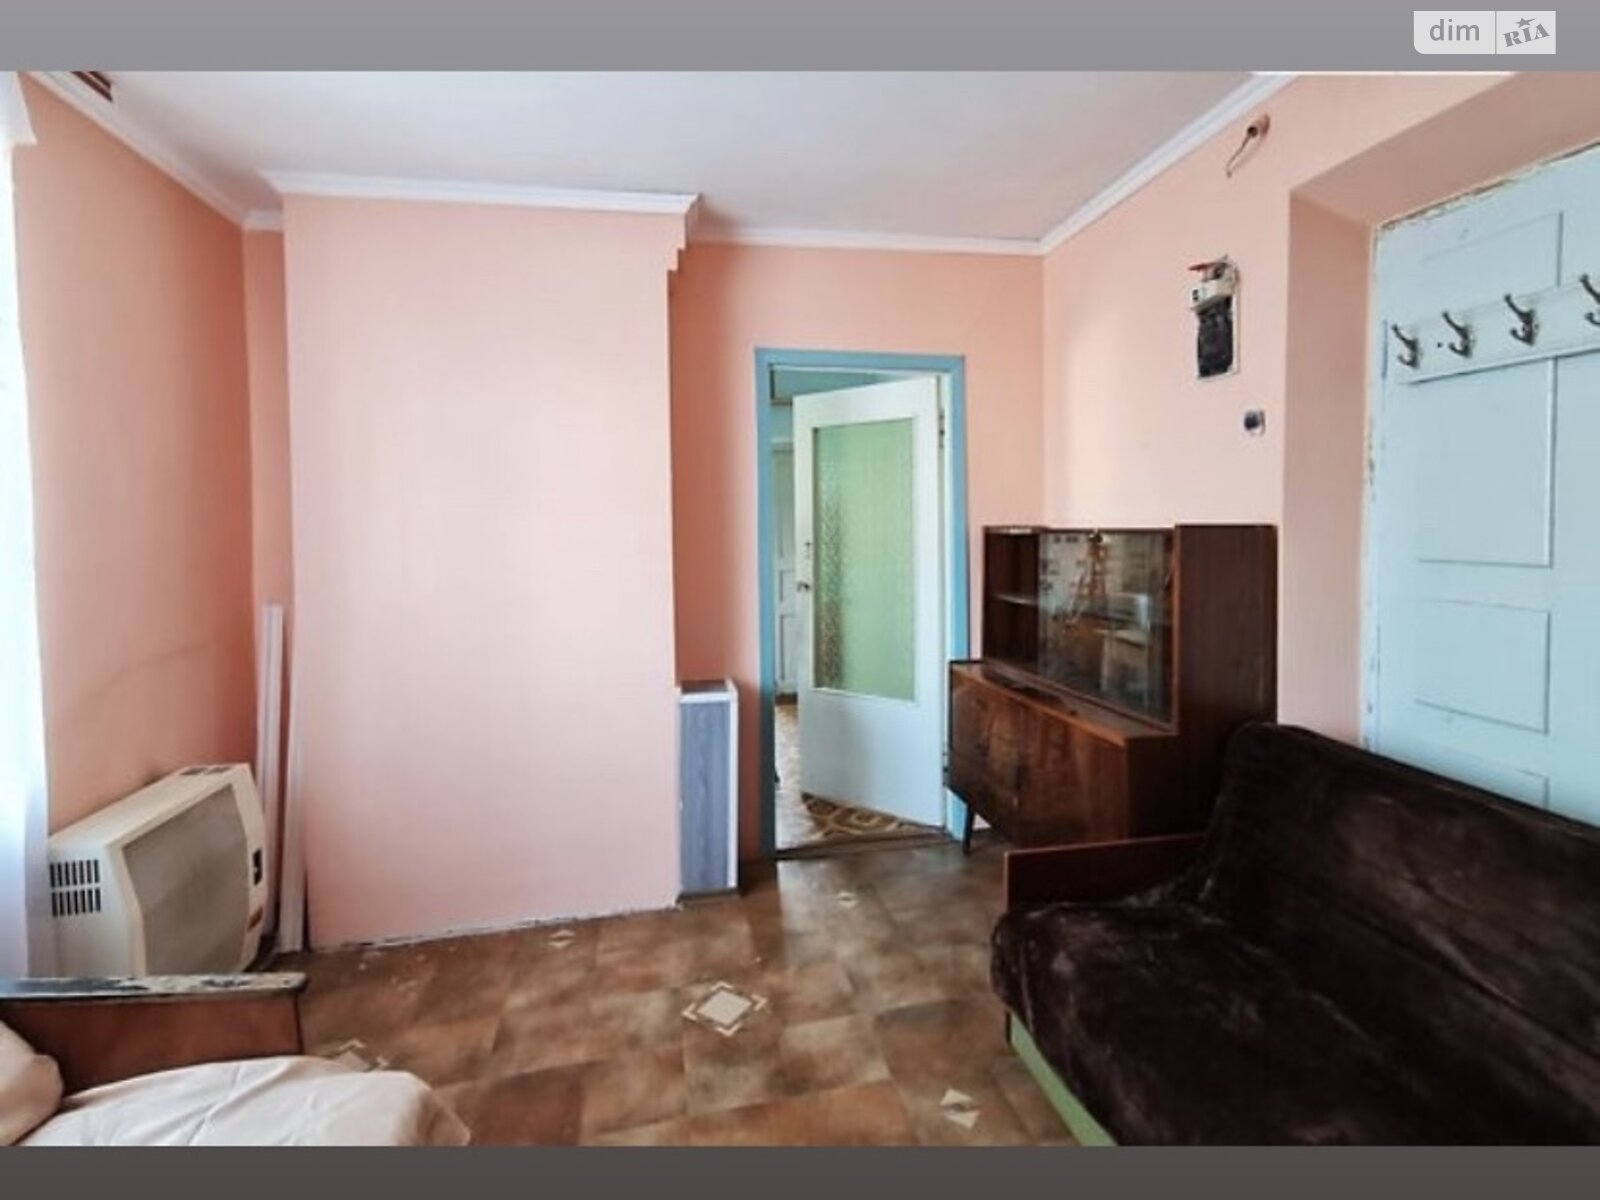 Продажа части дома в Хмельницком, улица Бажана, район Загот Зерно, 3 комнаты фото 1